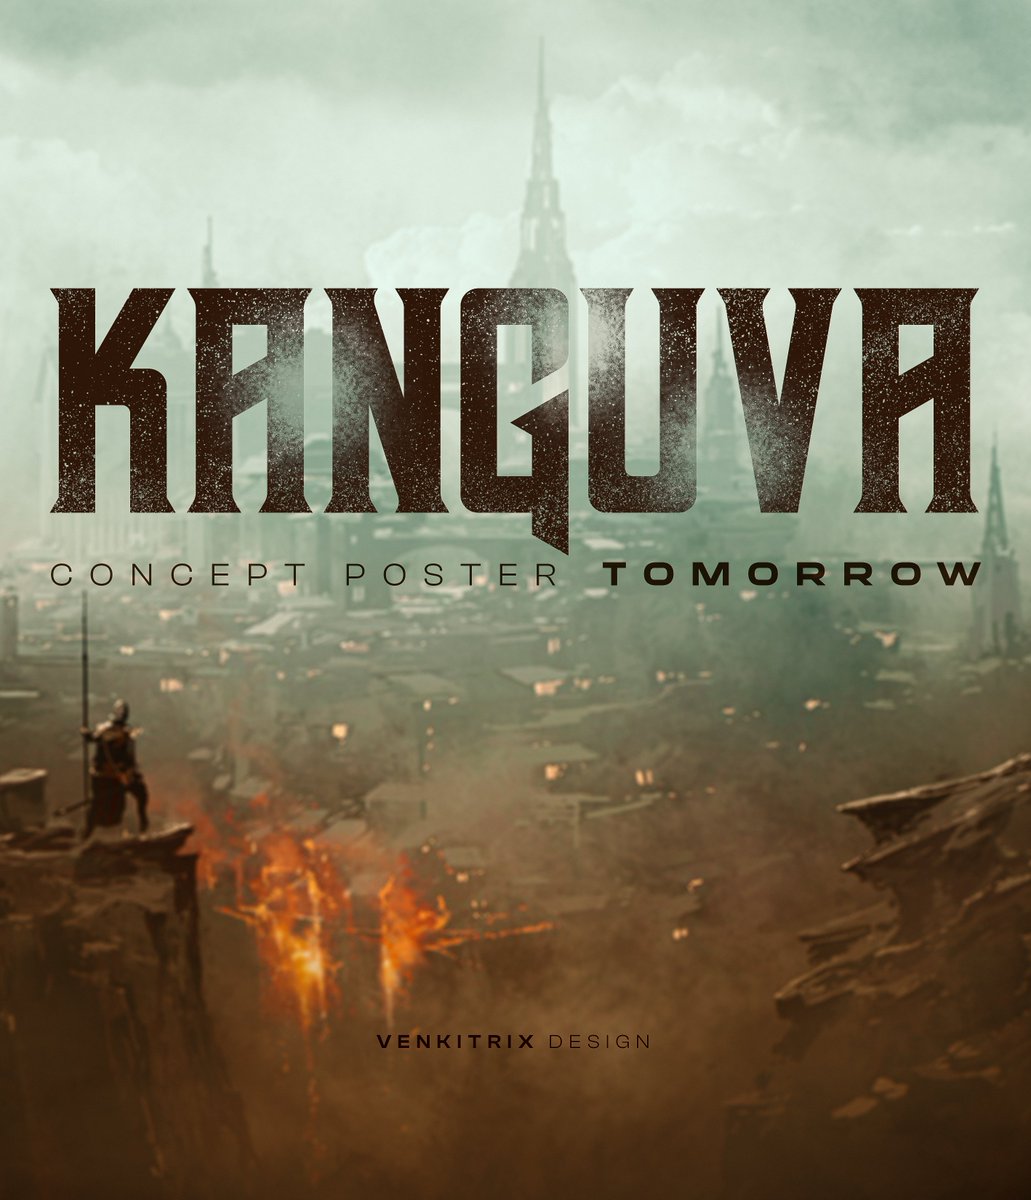 Kanguva Concept Poster from tomorrow ⚔️ 🔥@Suriya_offl 
.
#Kanguva #Suriya42 #SiruthaiSiva #Suriya #DishaPatani #KanguvaTheMovie #Siva 
@KanguvaTheMovie @Suriya_offl @DishPatani
@directorsiva @ThisIsDSP @StudioGreen2 @vetrivisuals @supremesundar